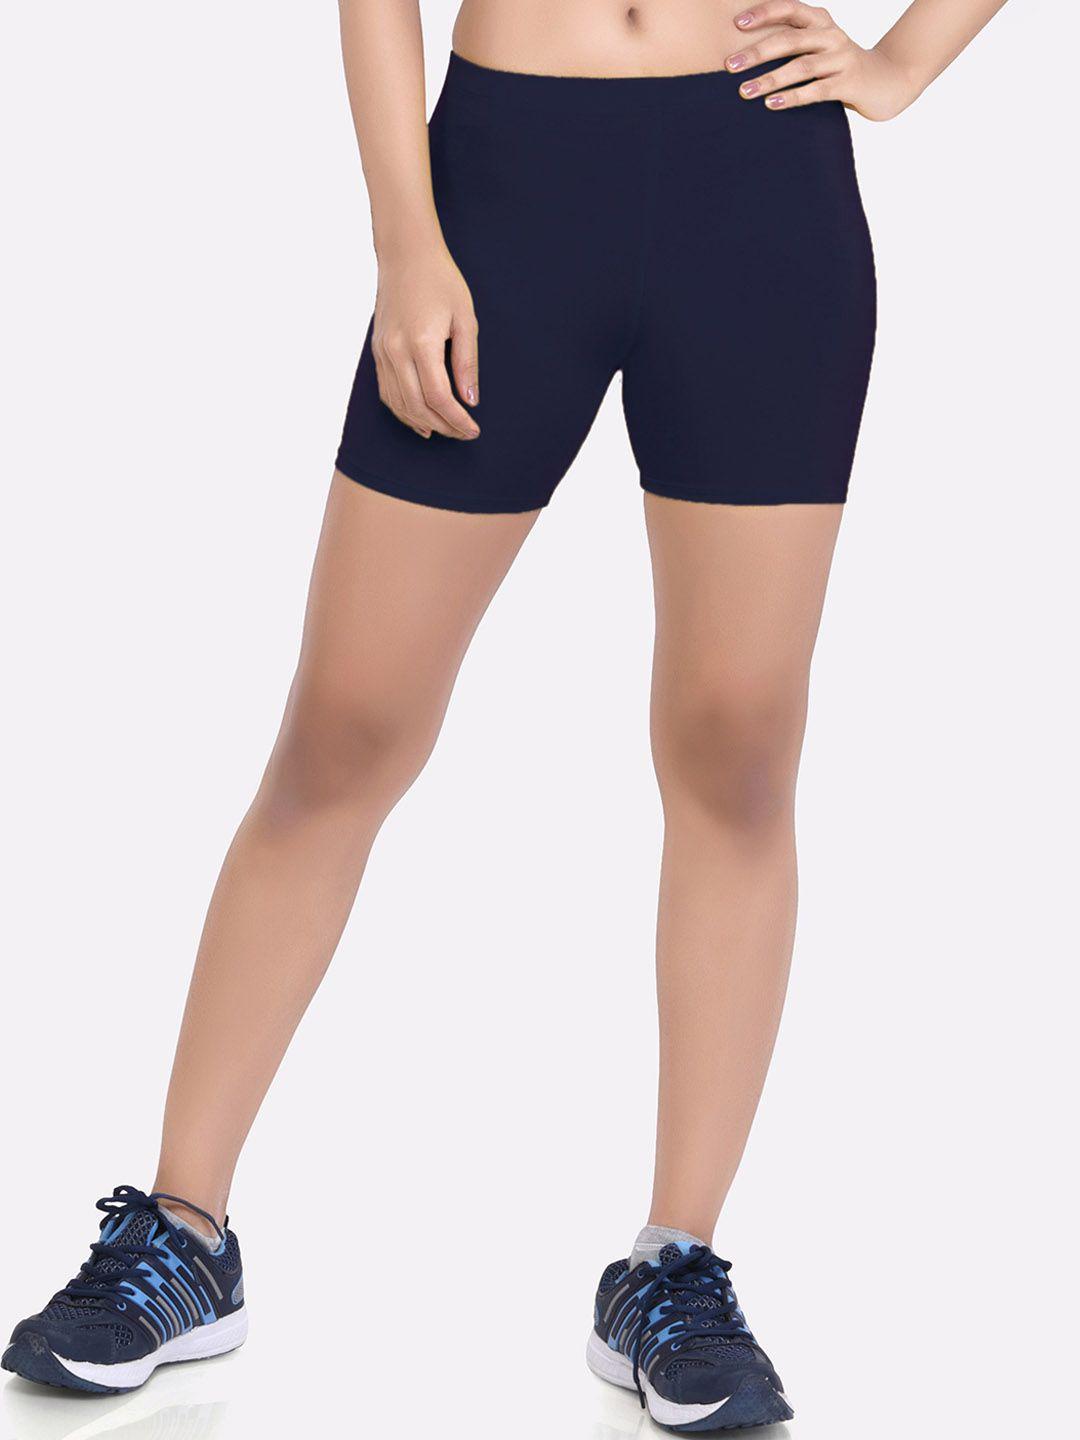 laasa sports women navy blue skinny fit training or gym sports shorts